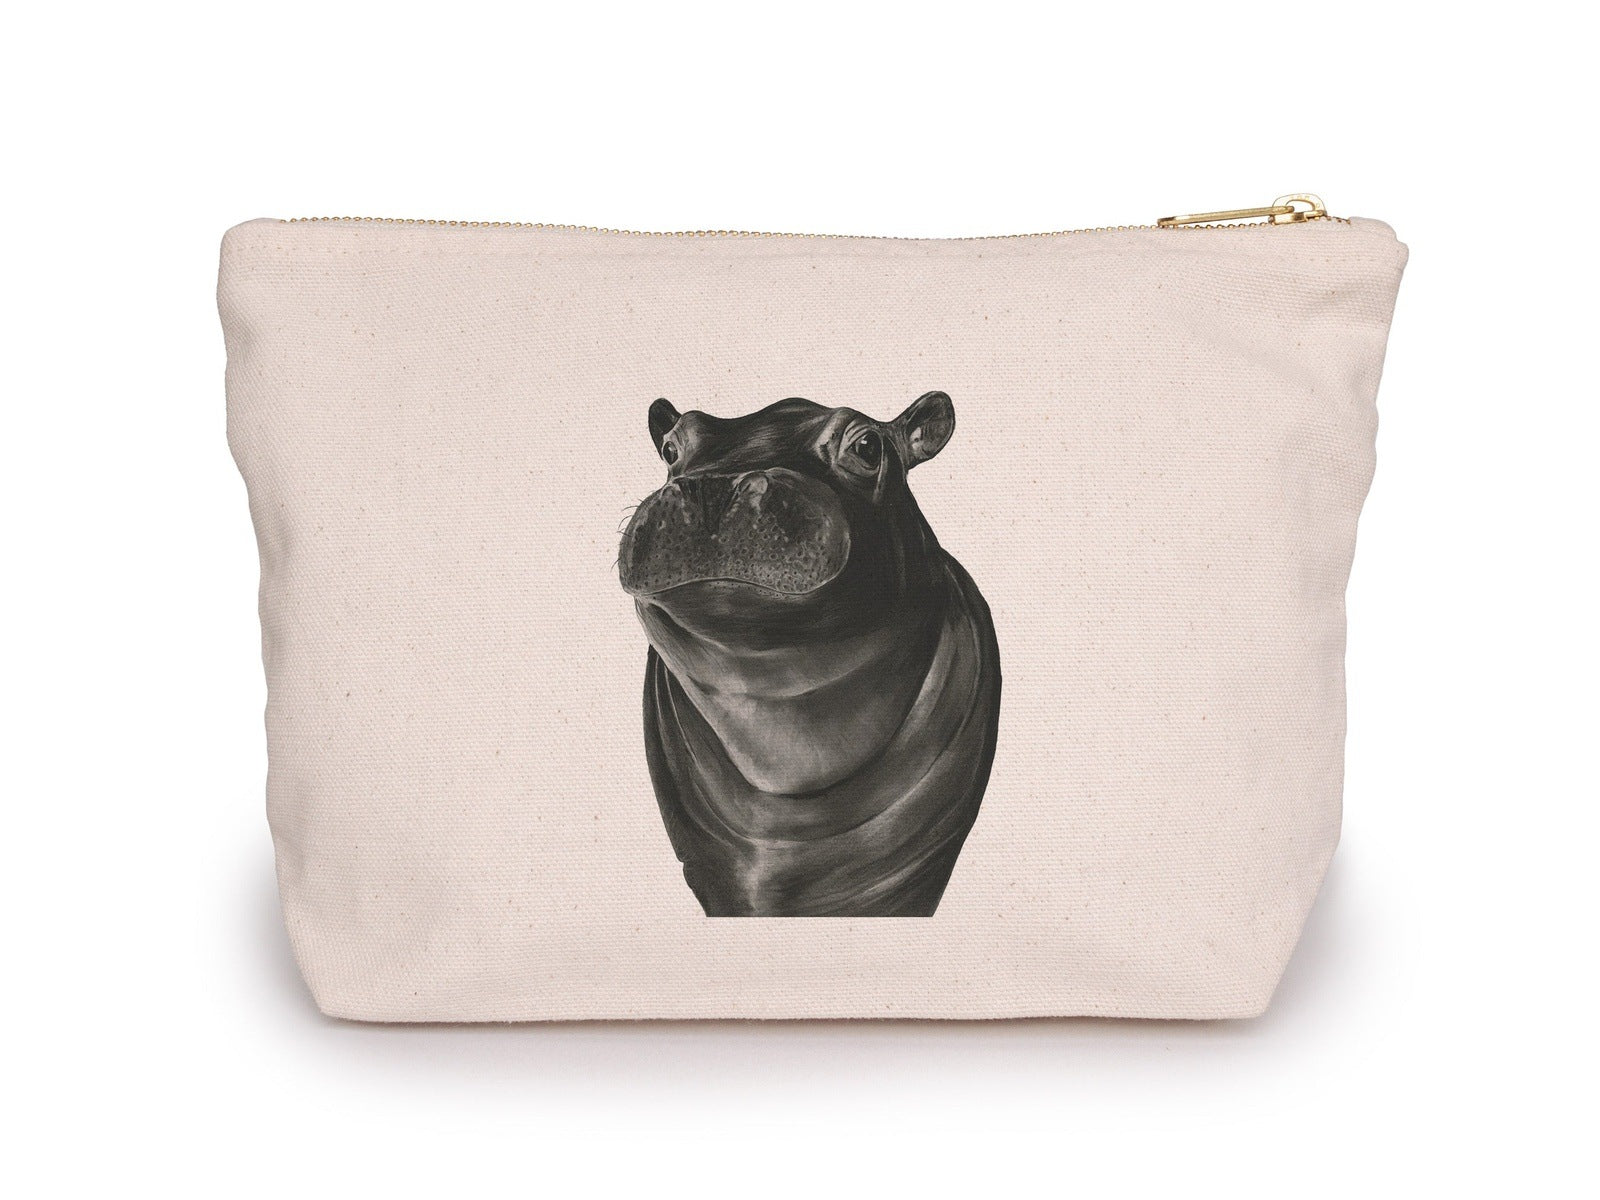 Hippo Pouch Bag From Libra Fine Arts